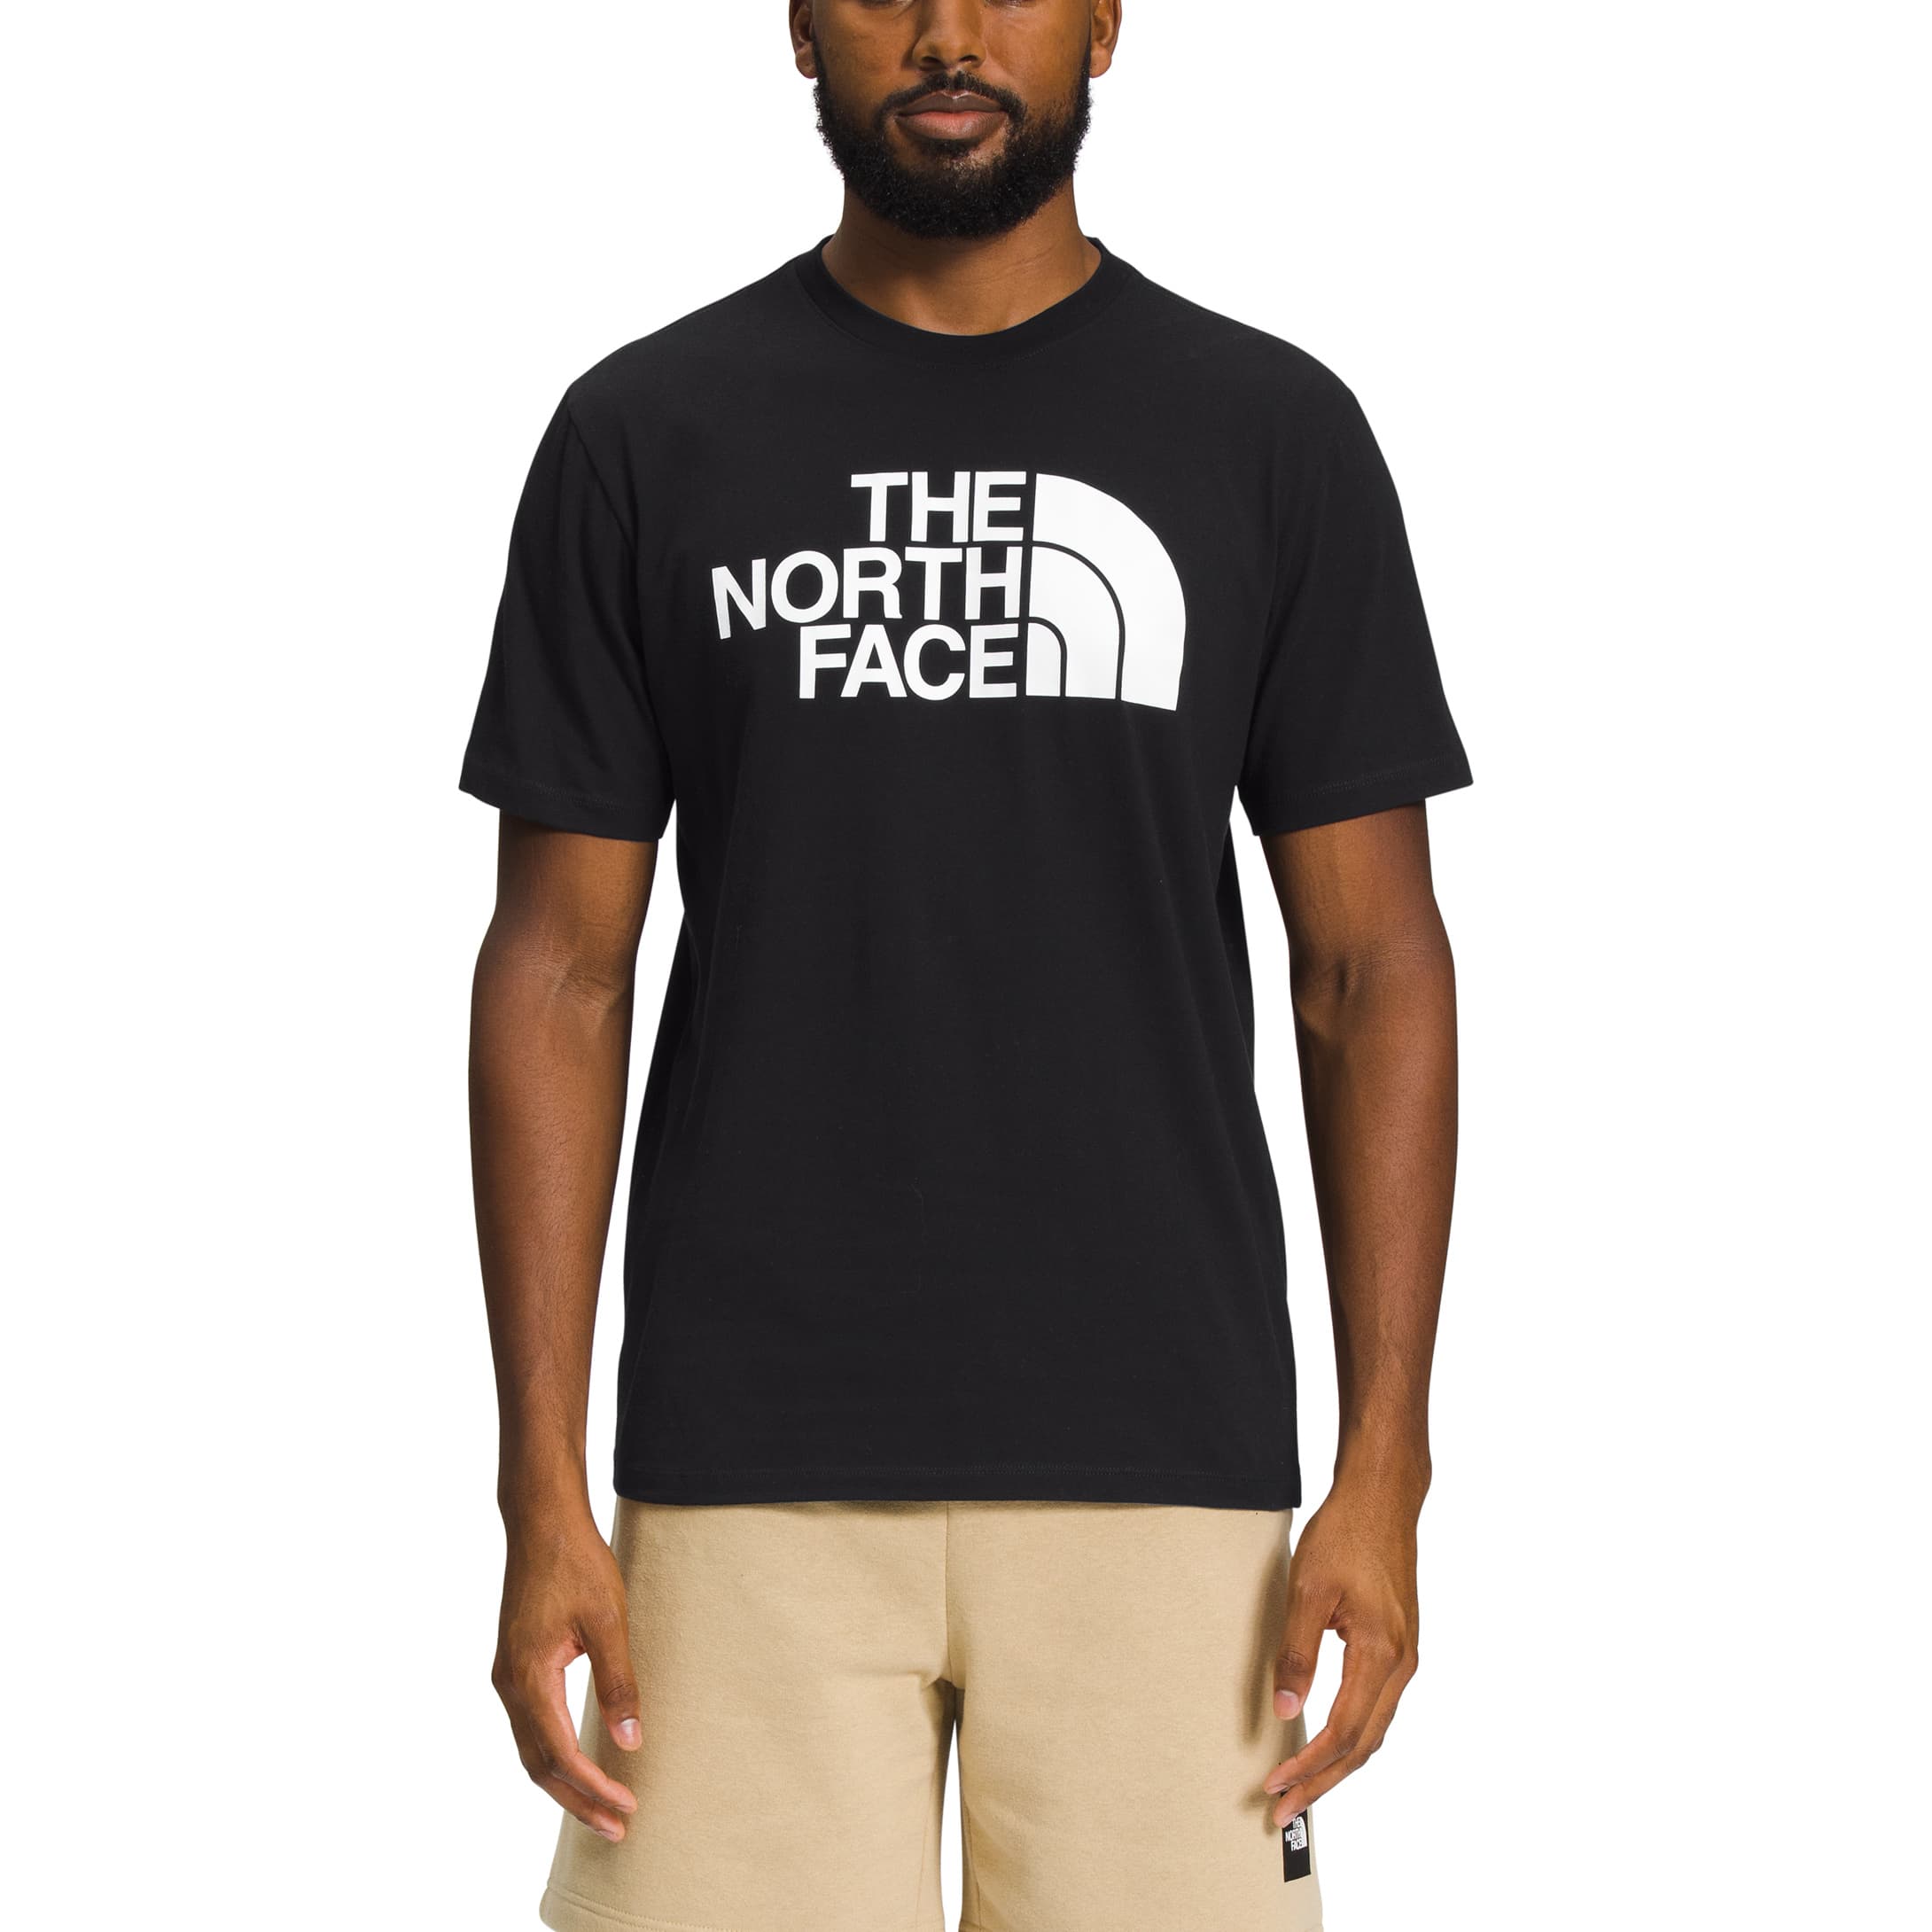 The North Face AO Glacier tee - men's t-shirt - Mountain eXperience